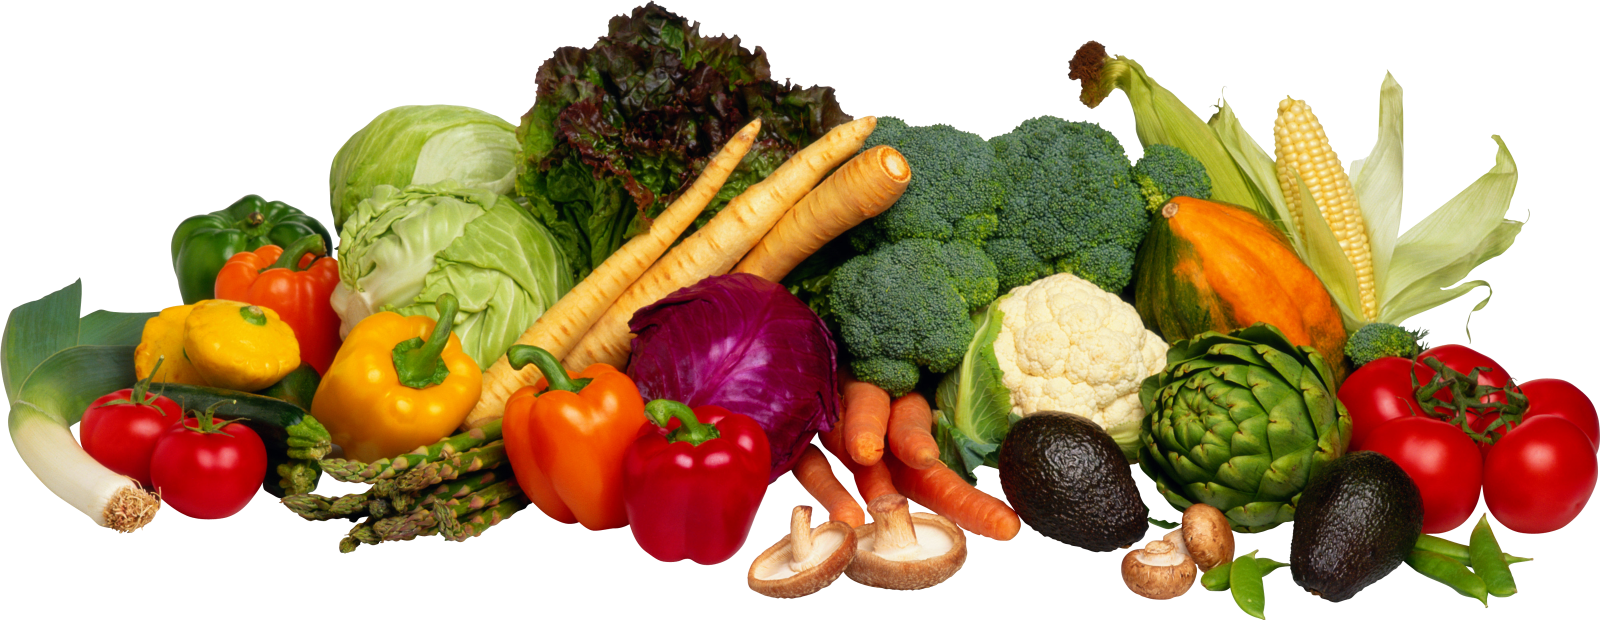 انظر مخلوقات الله في اشكال الخضروات 0067+-+%D8%AE%D8%B6%D8%B1%D9%88%D8%A7%D8%AA+-+L%C3%A9gumes+-+Vegetables